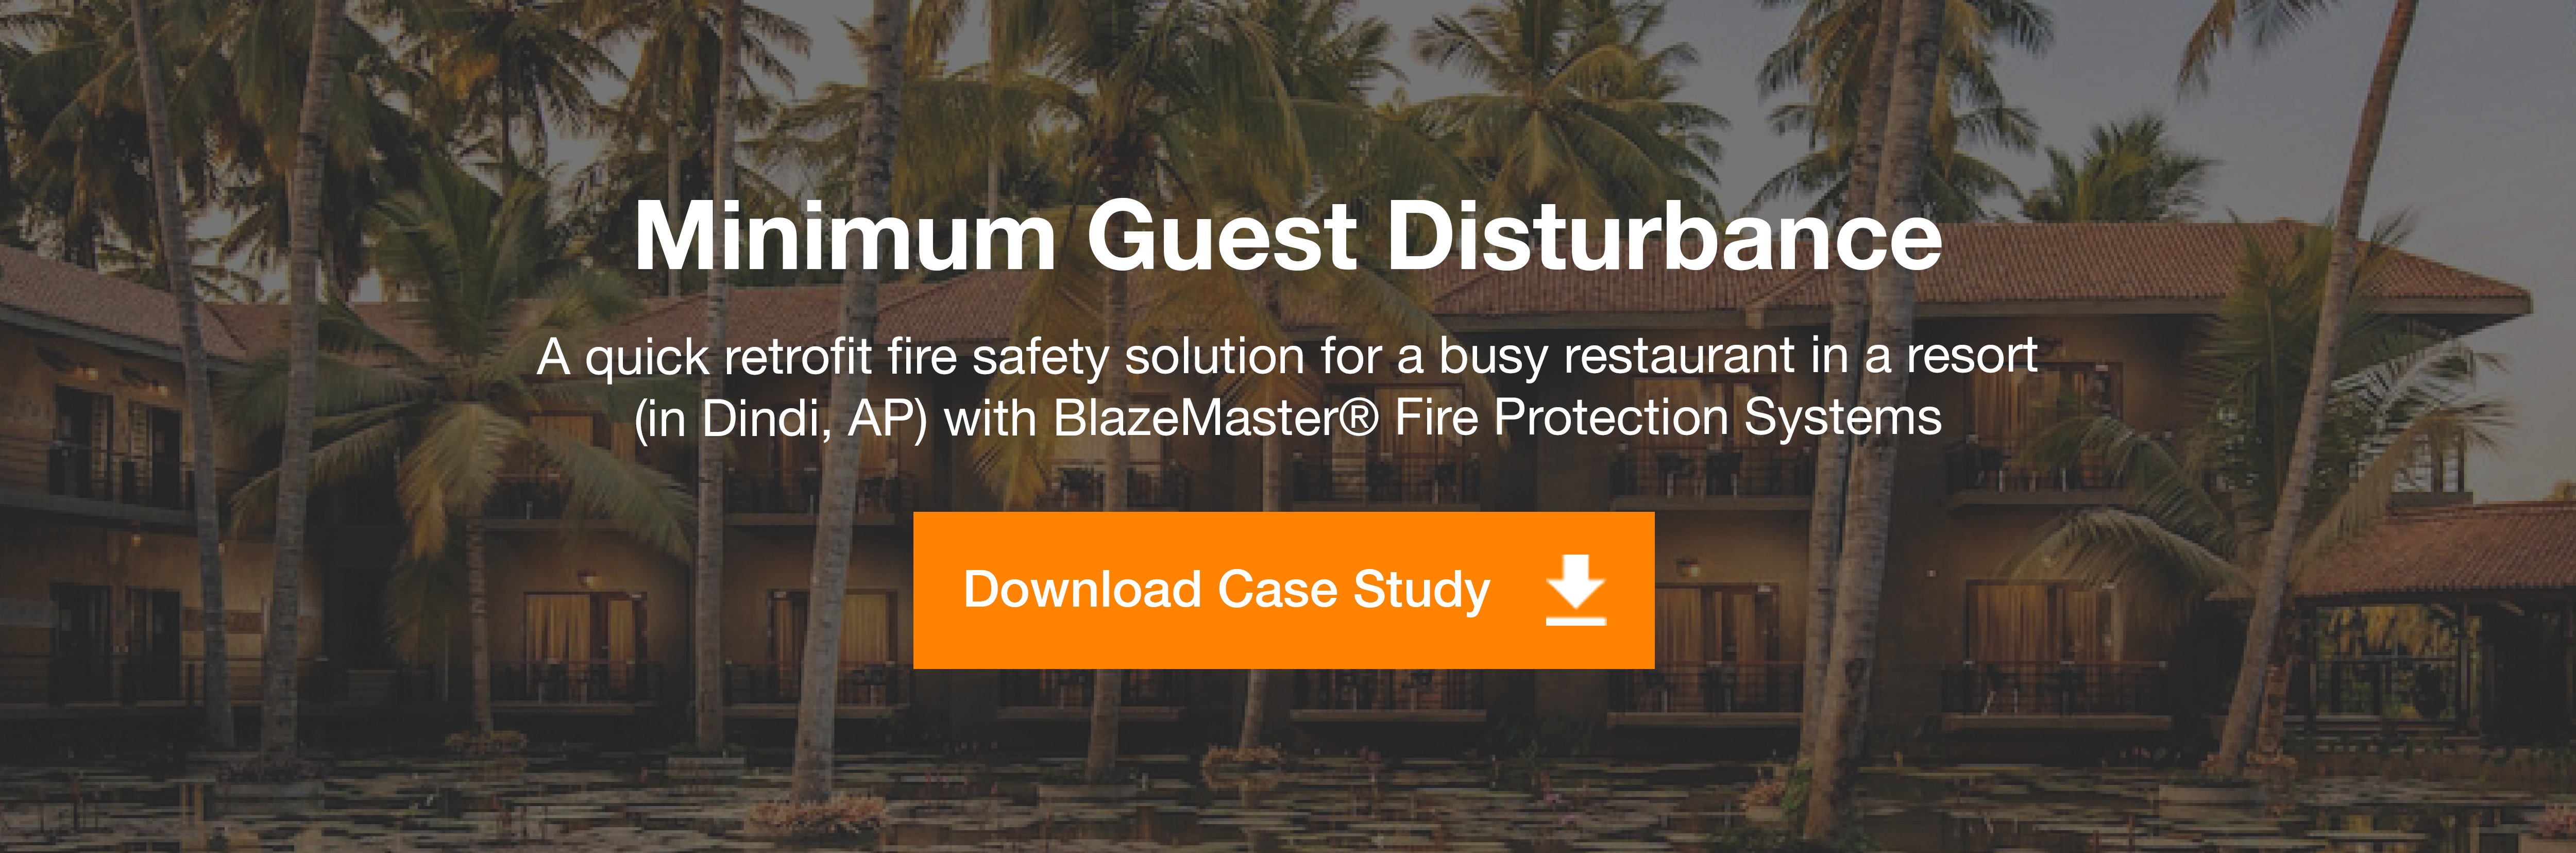 blazemaster retrofit case study